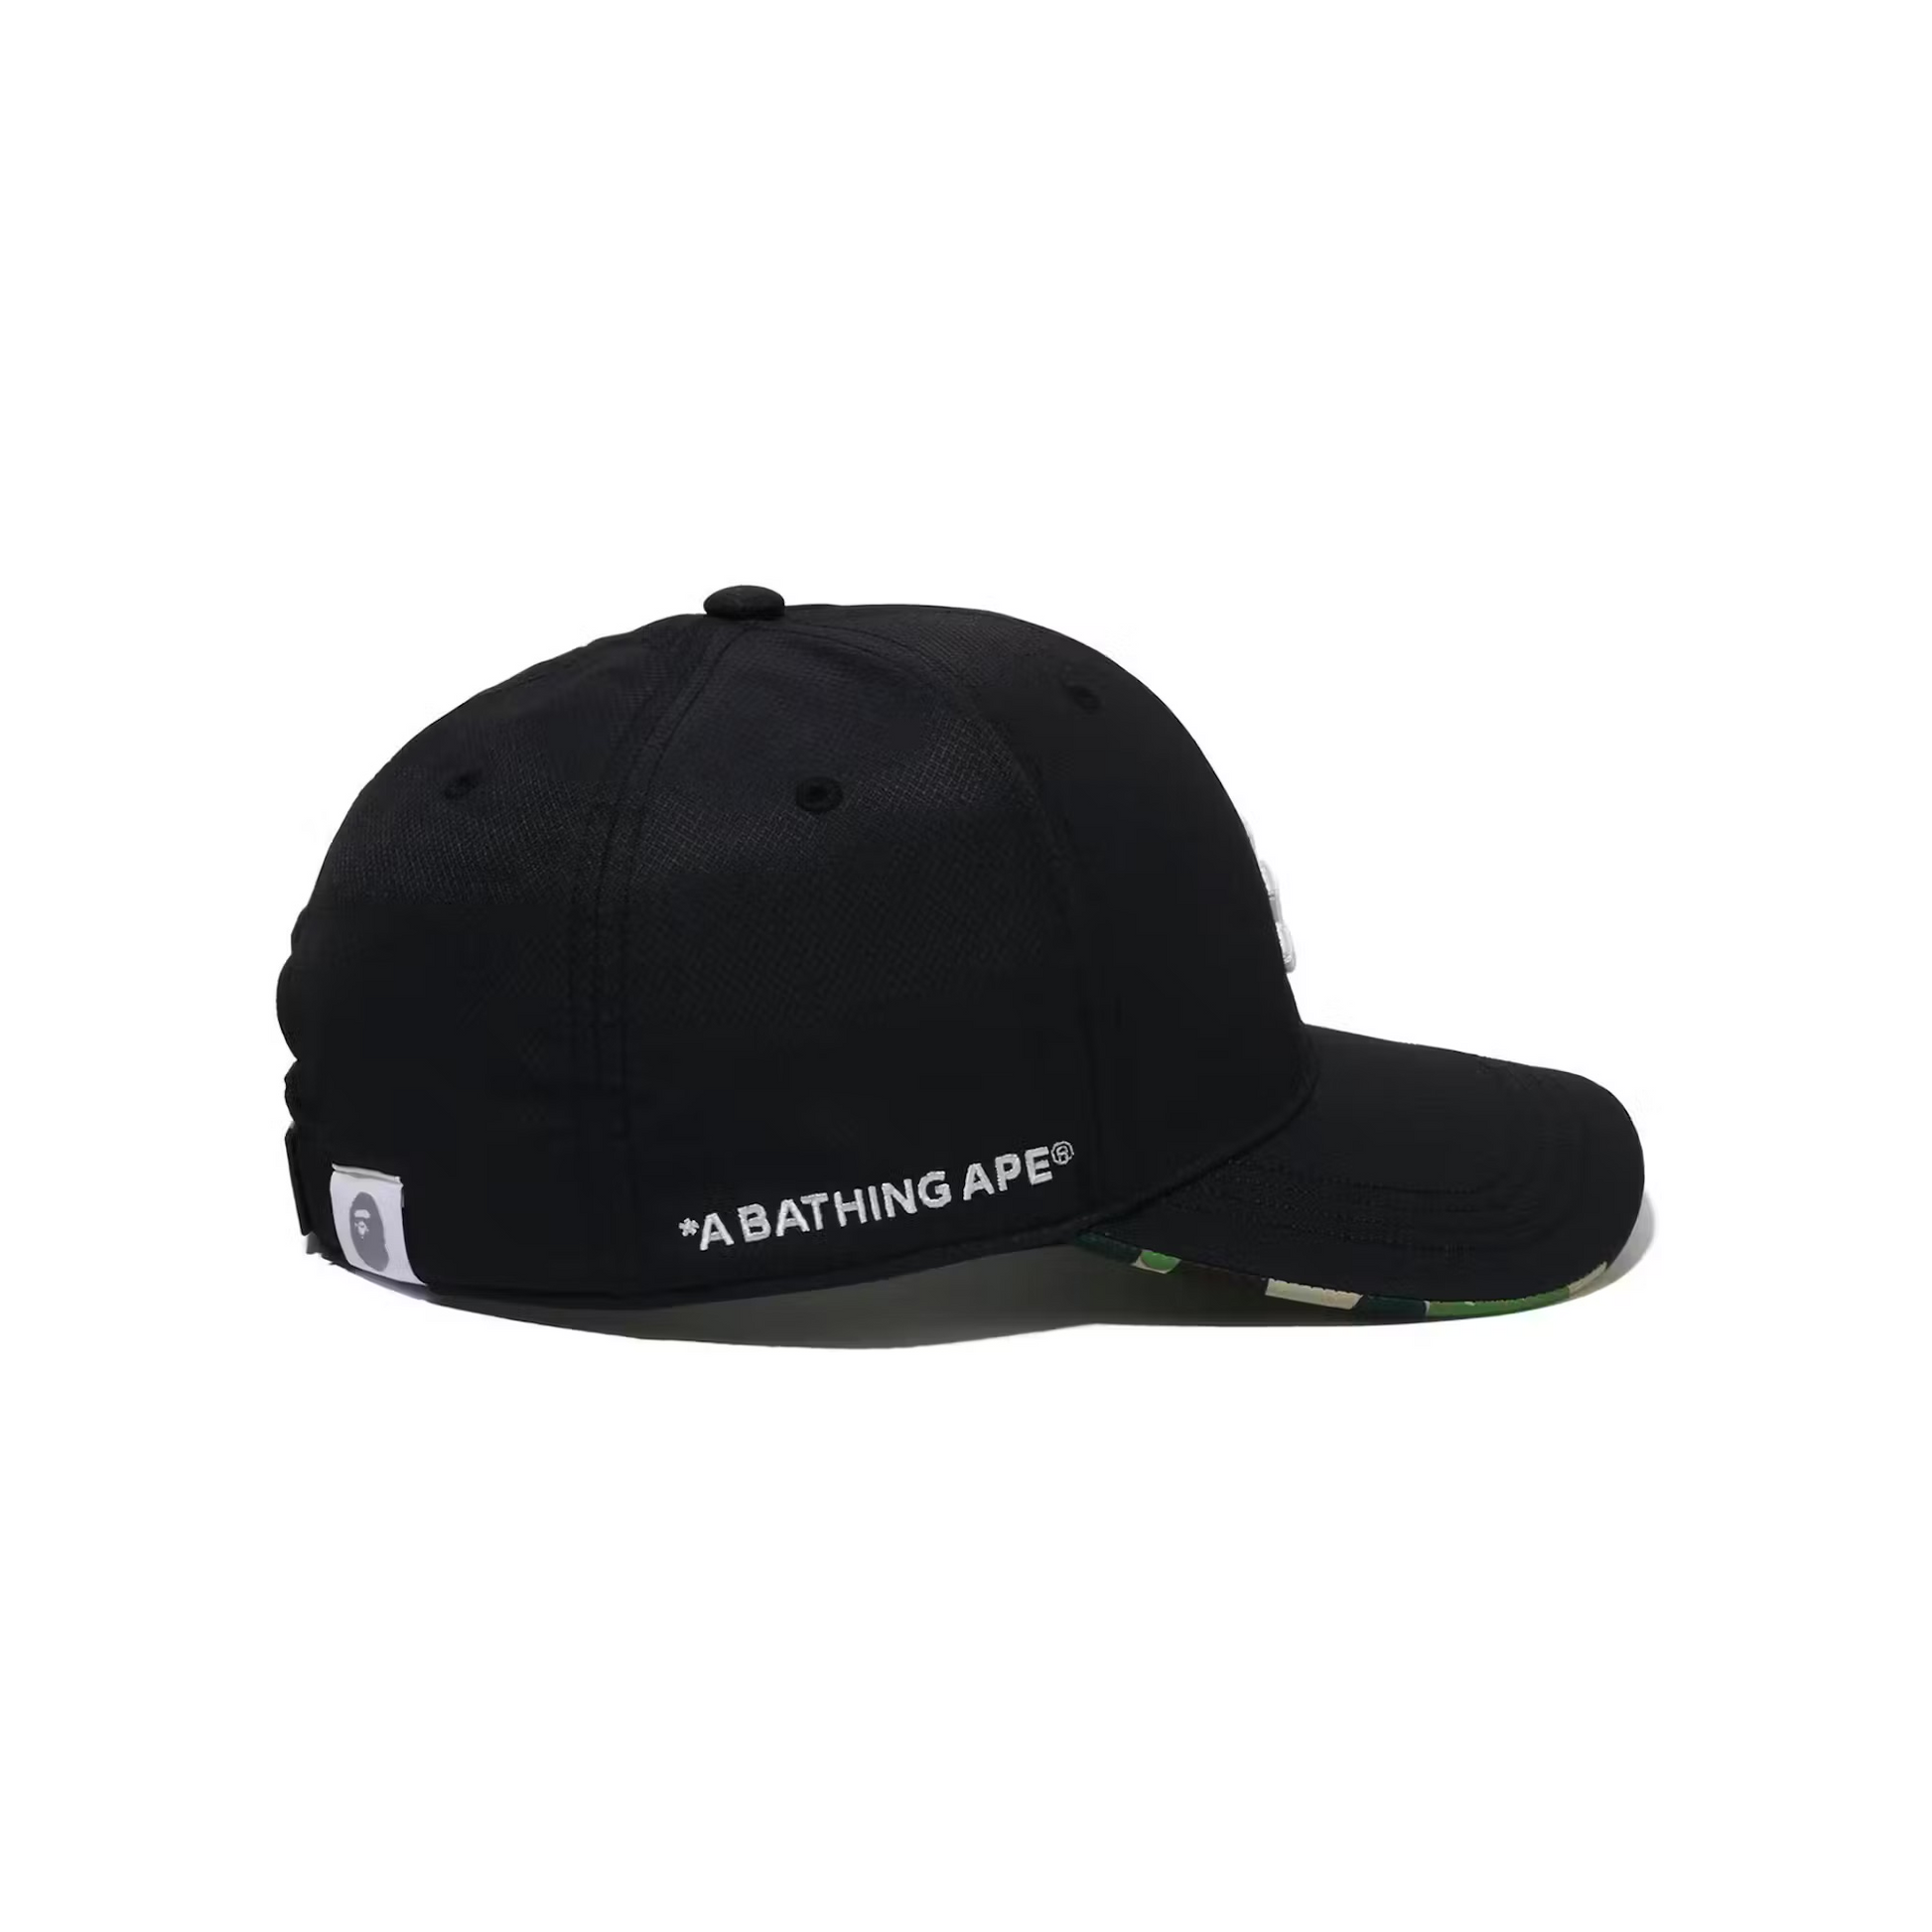 BAPE x Adidas Golf Cap Black Bape